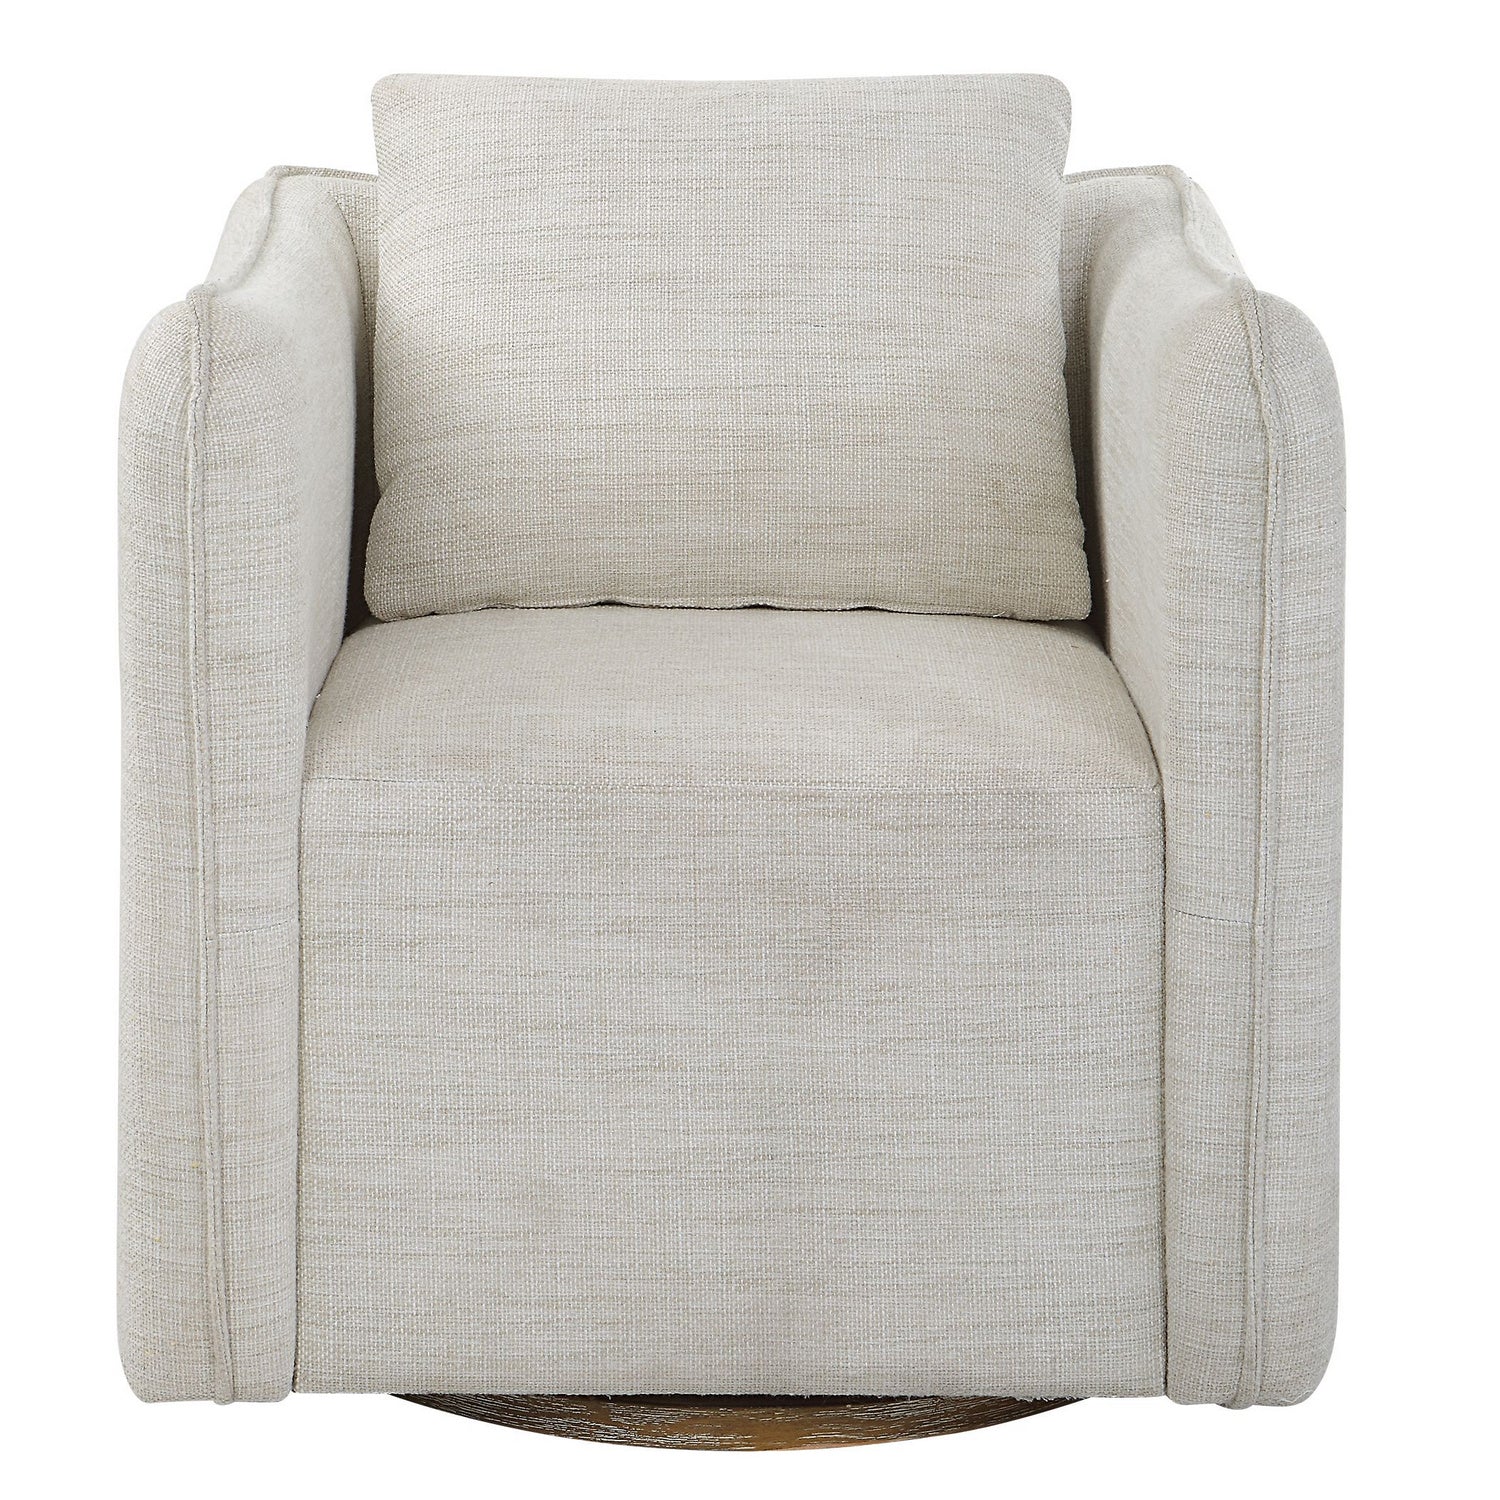 Uttermost - Armless Chair - Corben - Off-white- Union Lighting Luminaires Decor